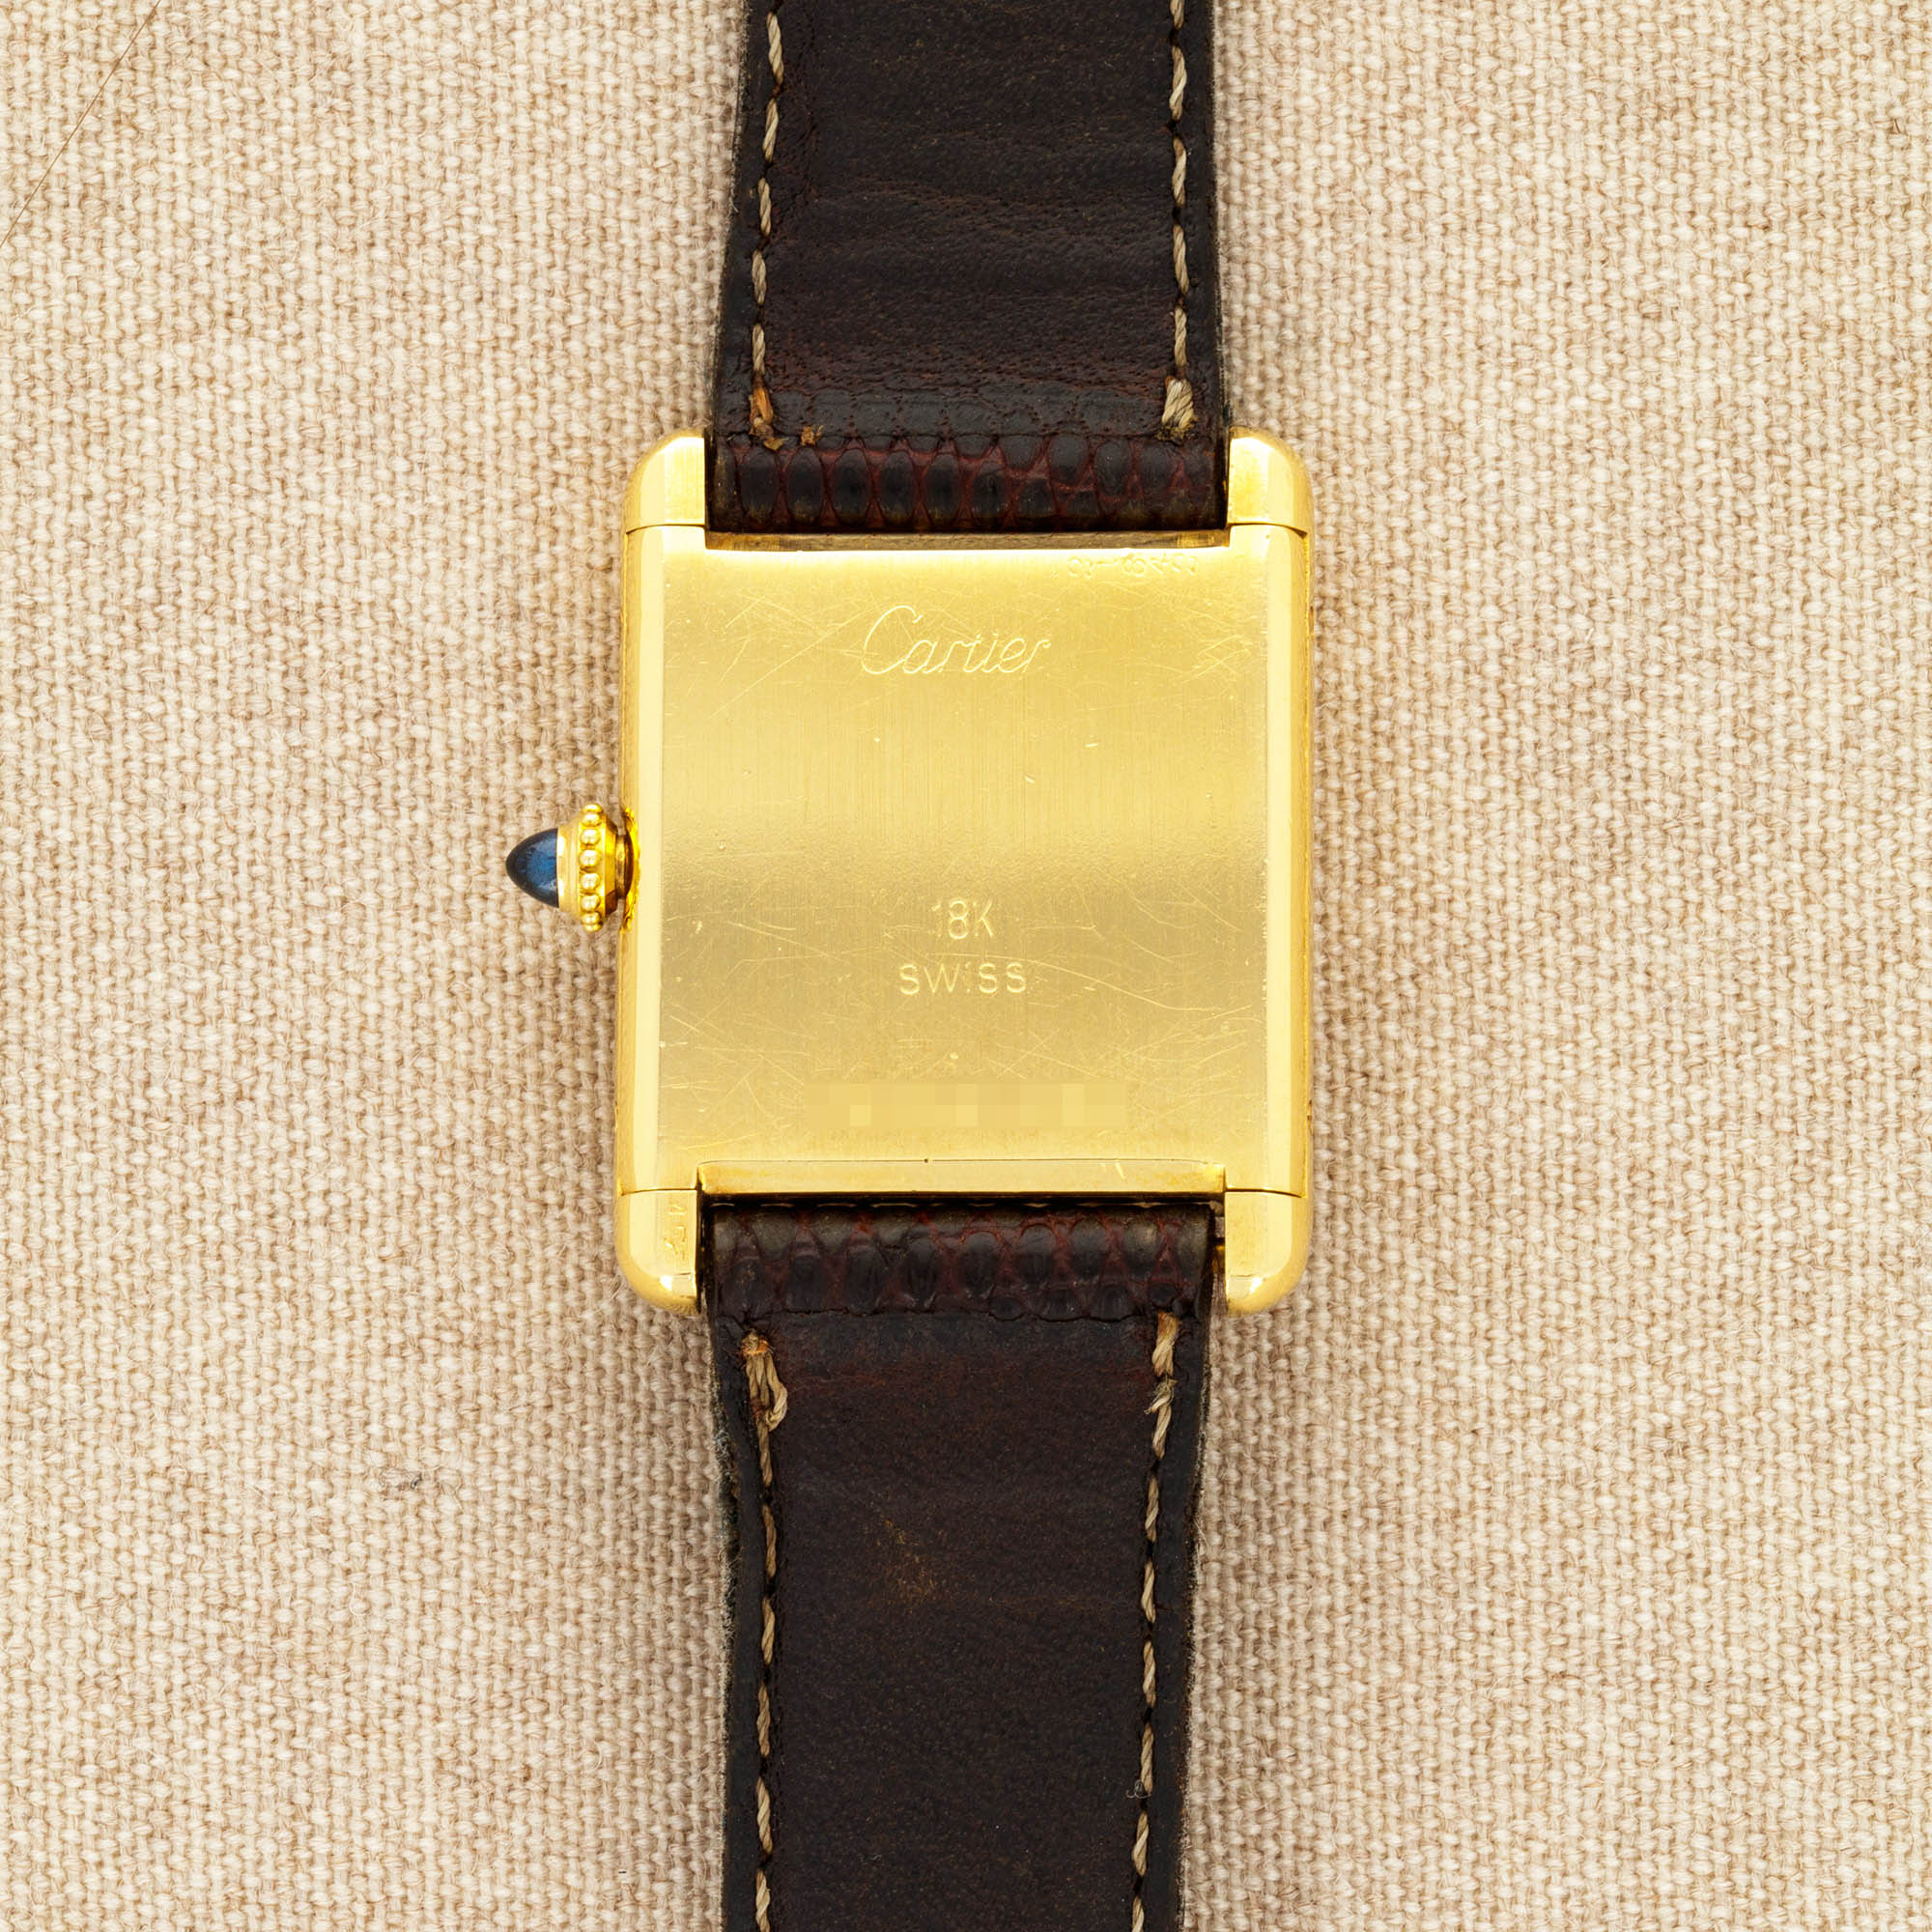 Cartier - Cartier Yellow Gold Tank Louis - The Keystone Watches